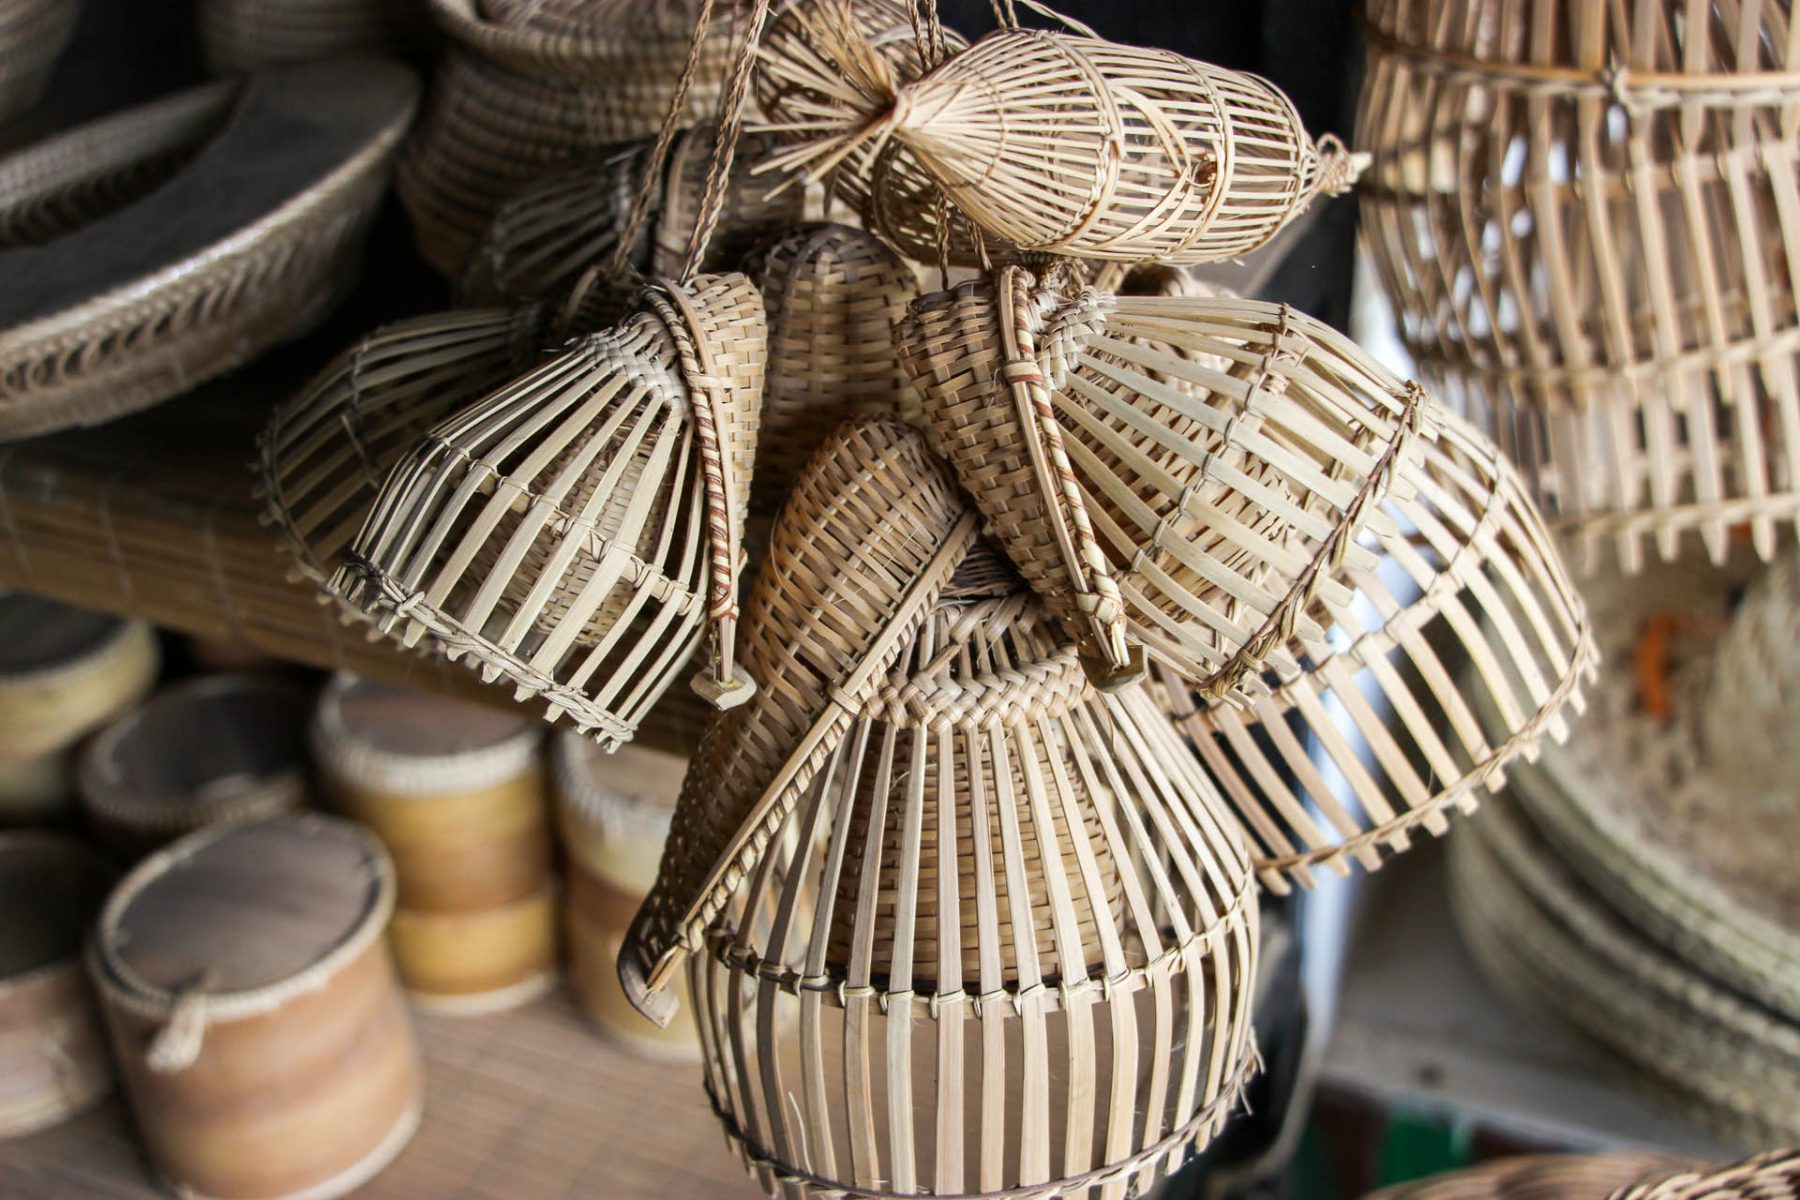 Rattan Handicraft and Fiber Products - Fair Trade Village